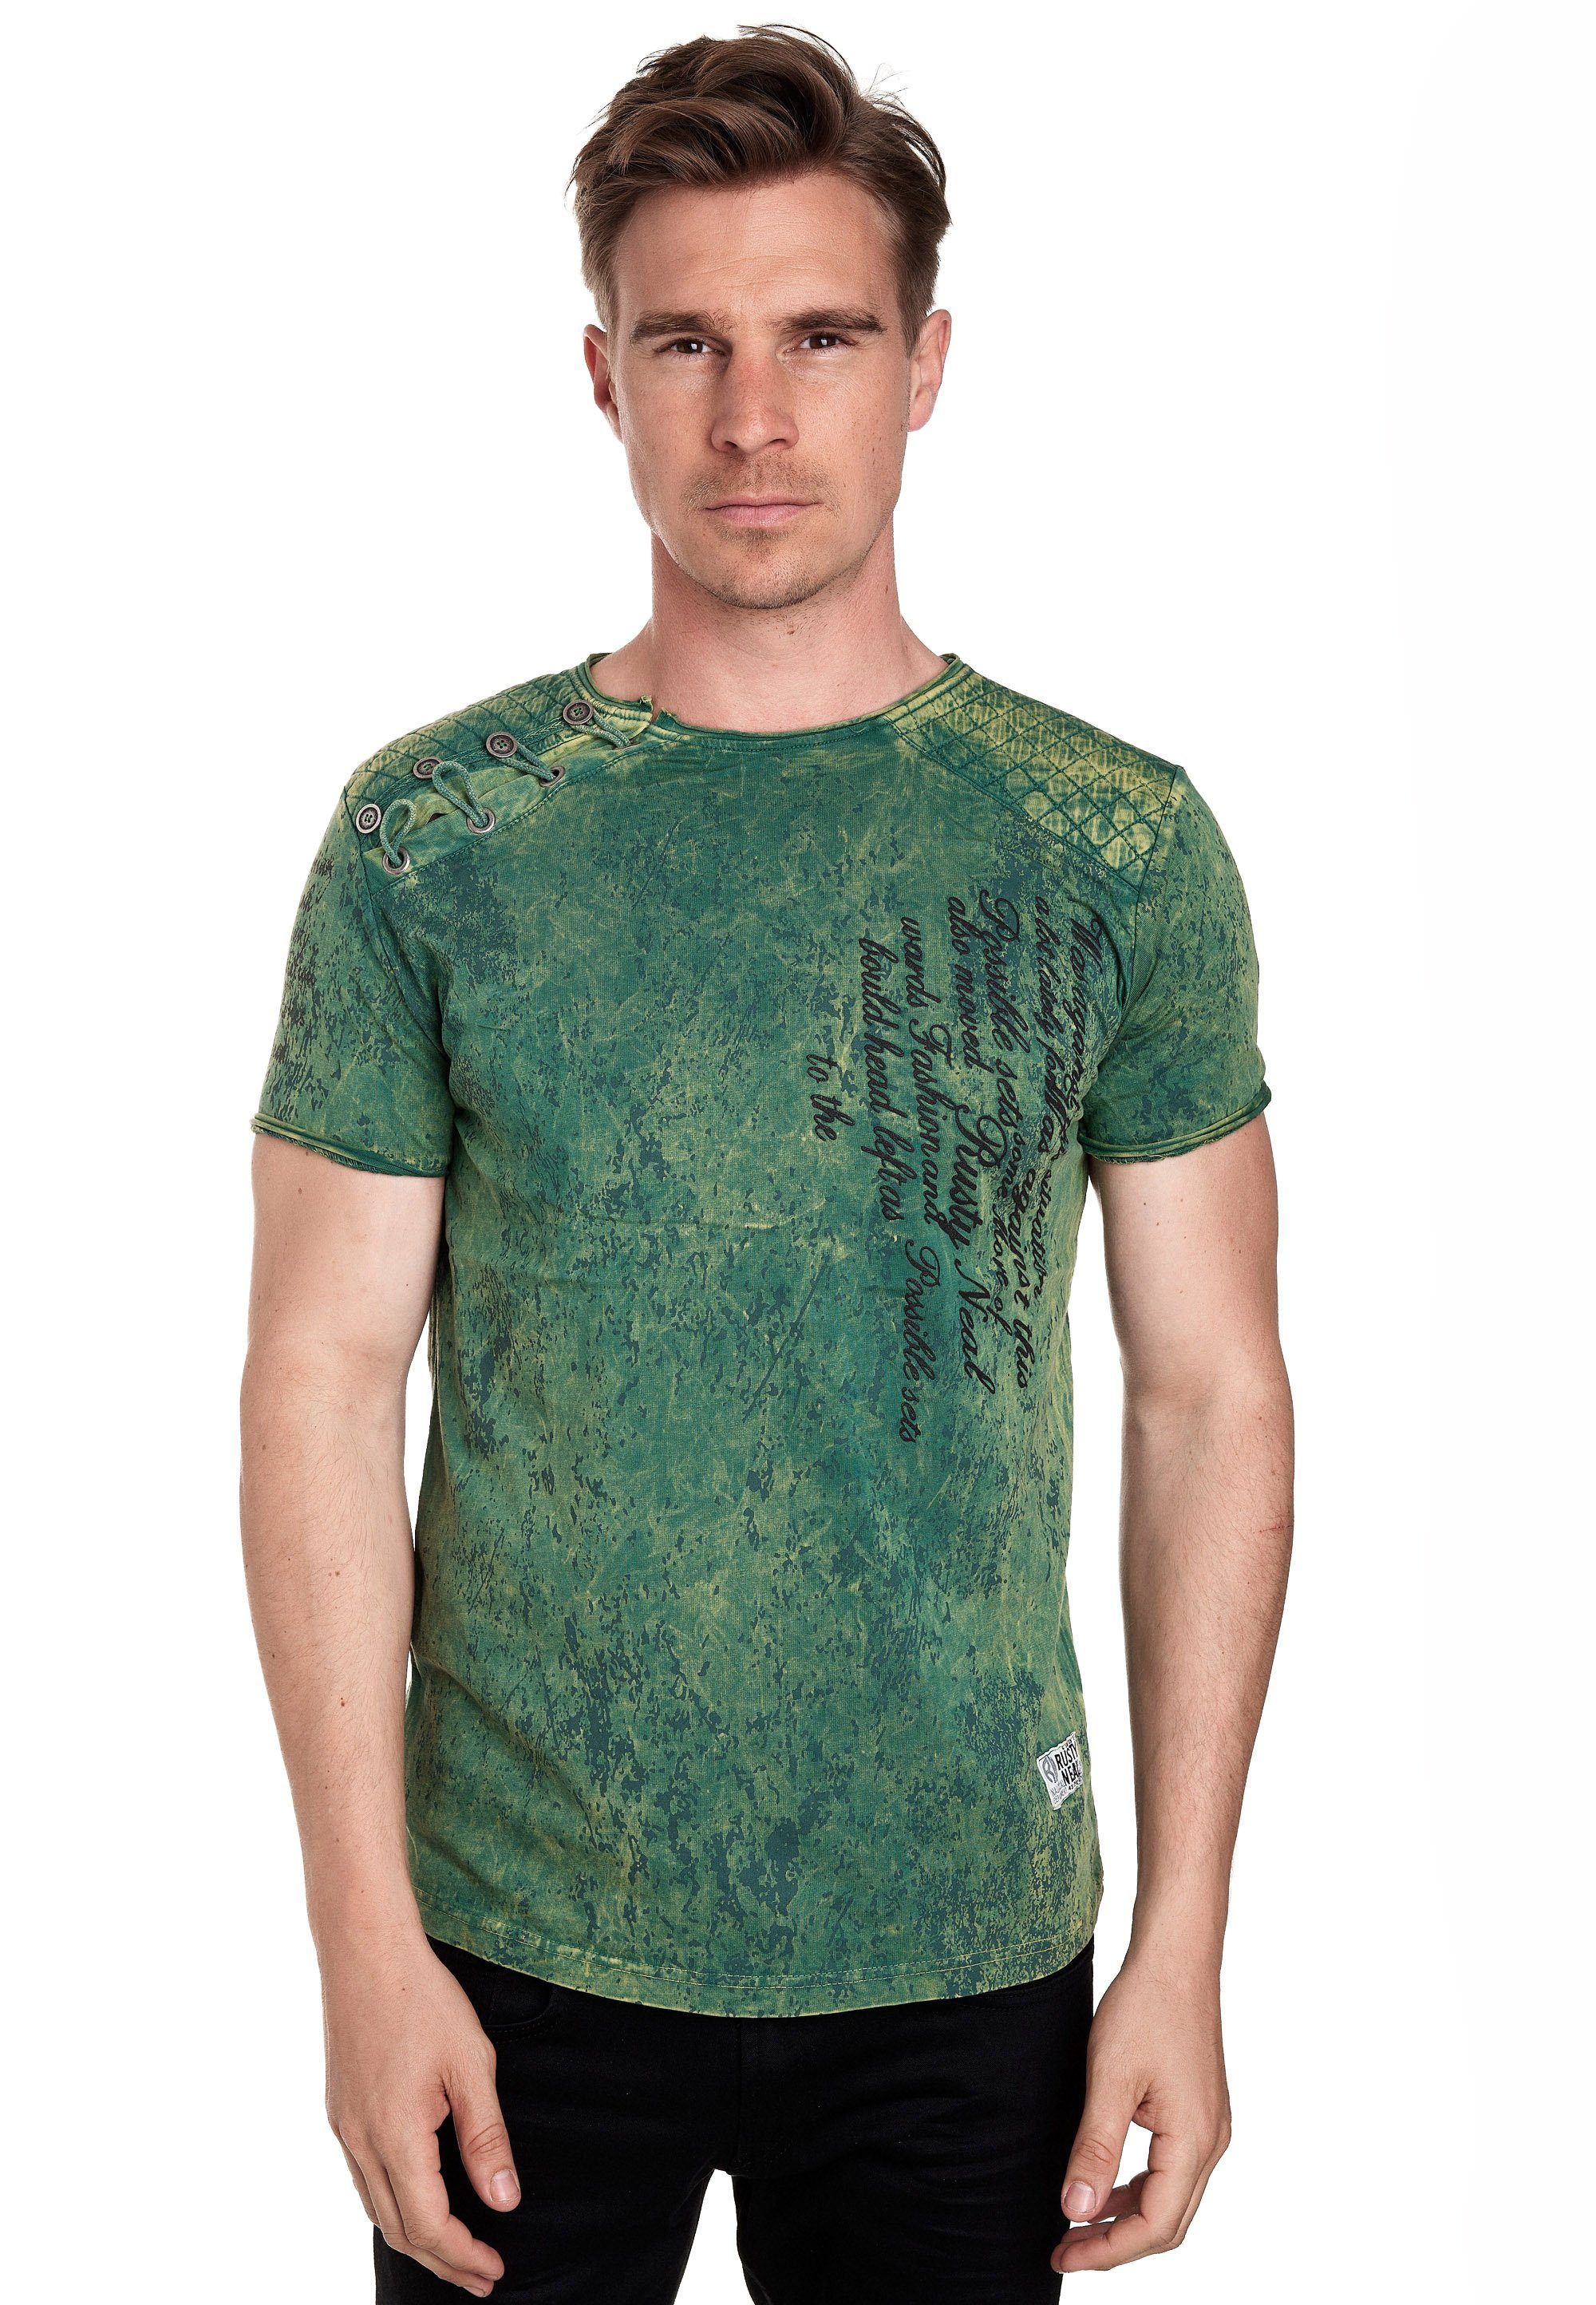 Rusty Neal T-Shirt im dunkelgrün Vintage-Look tollen